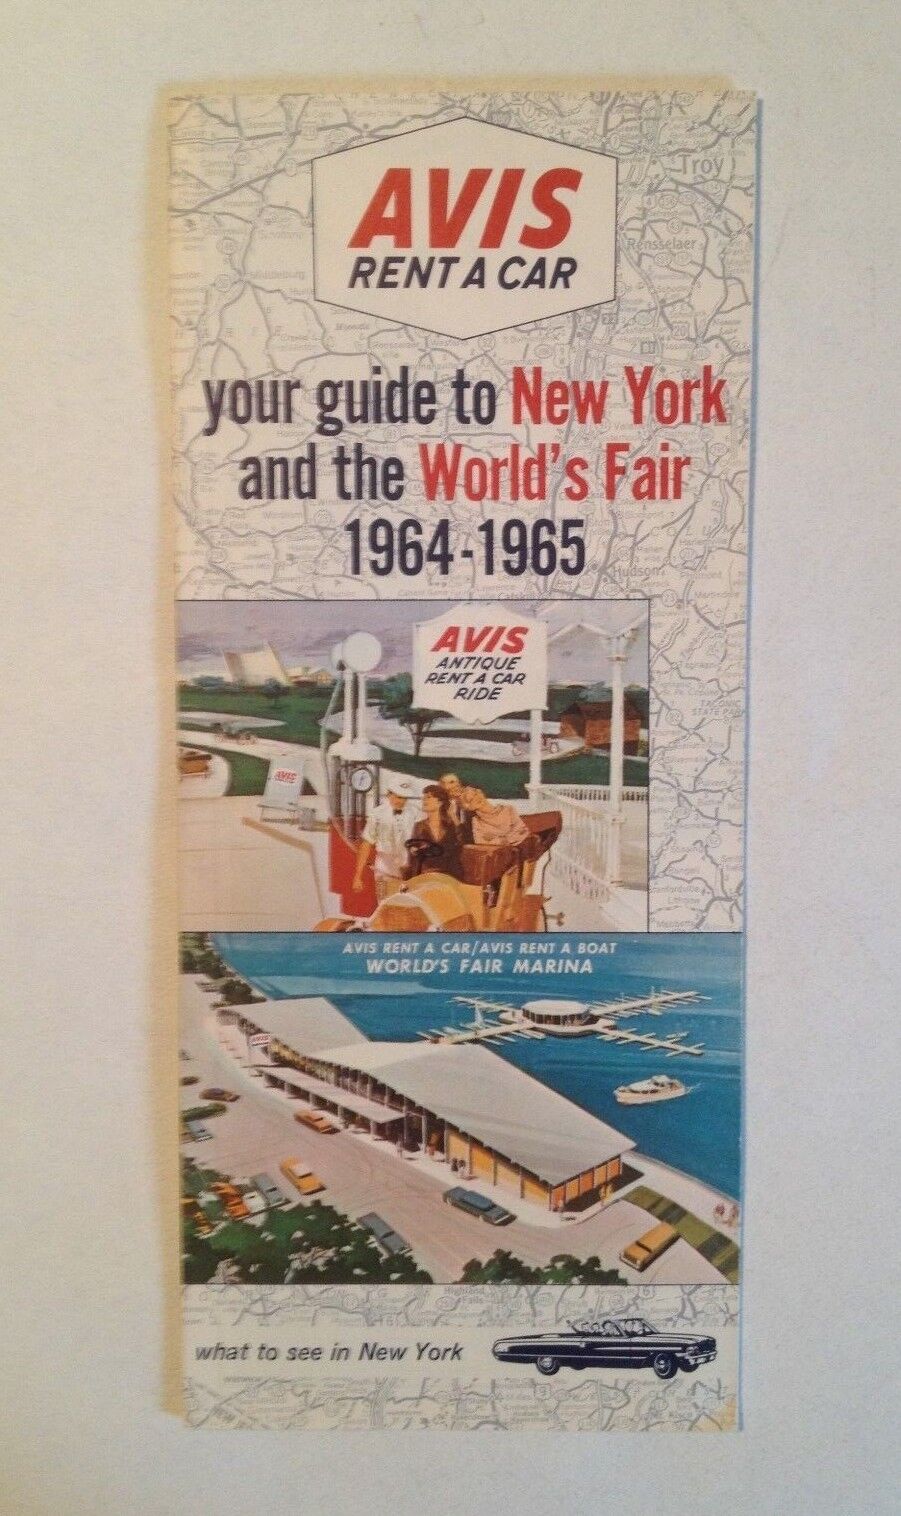 Avis Rent A Car Pamphlet/Brochure from the 1964-65 New York World's Fair